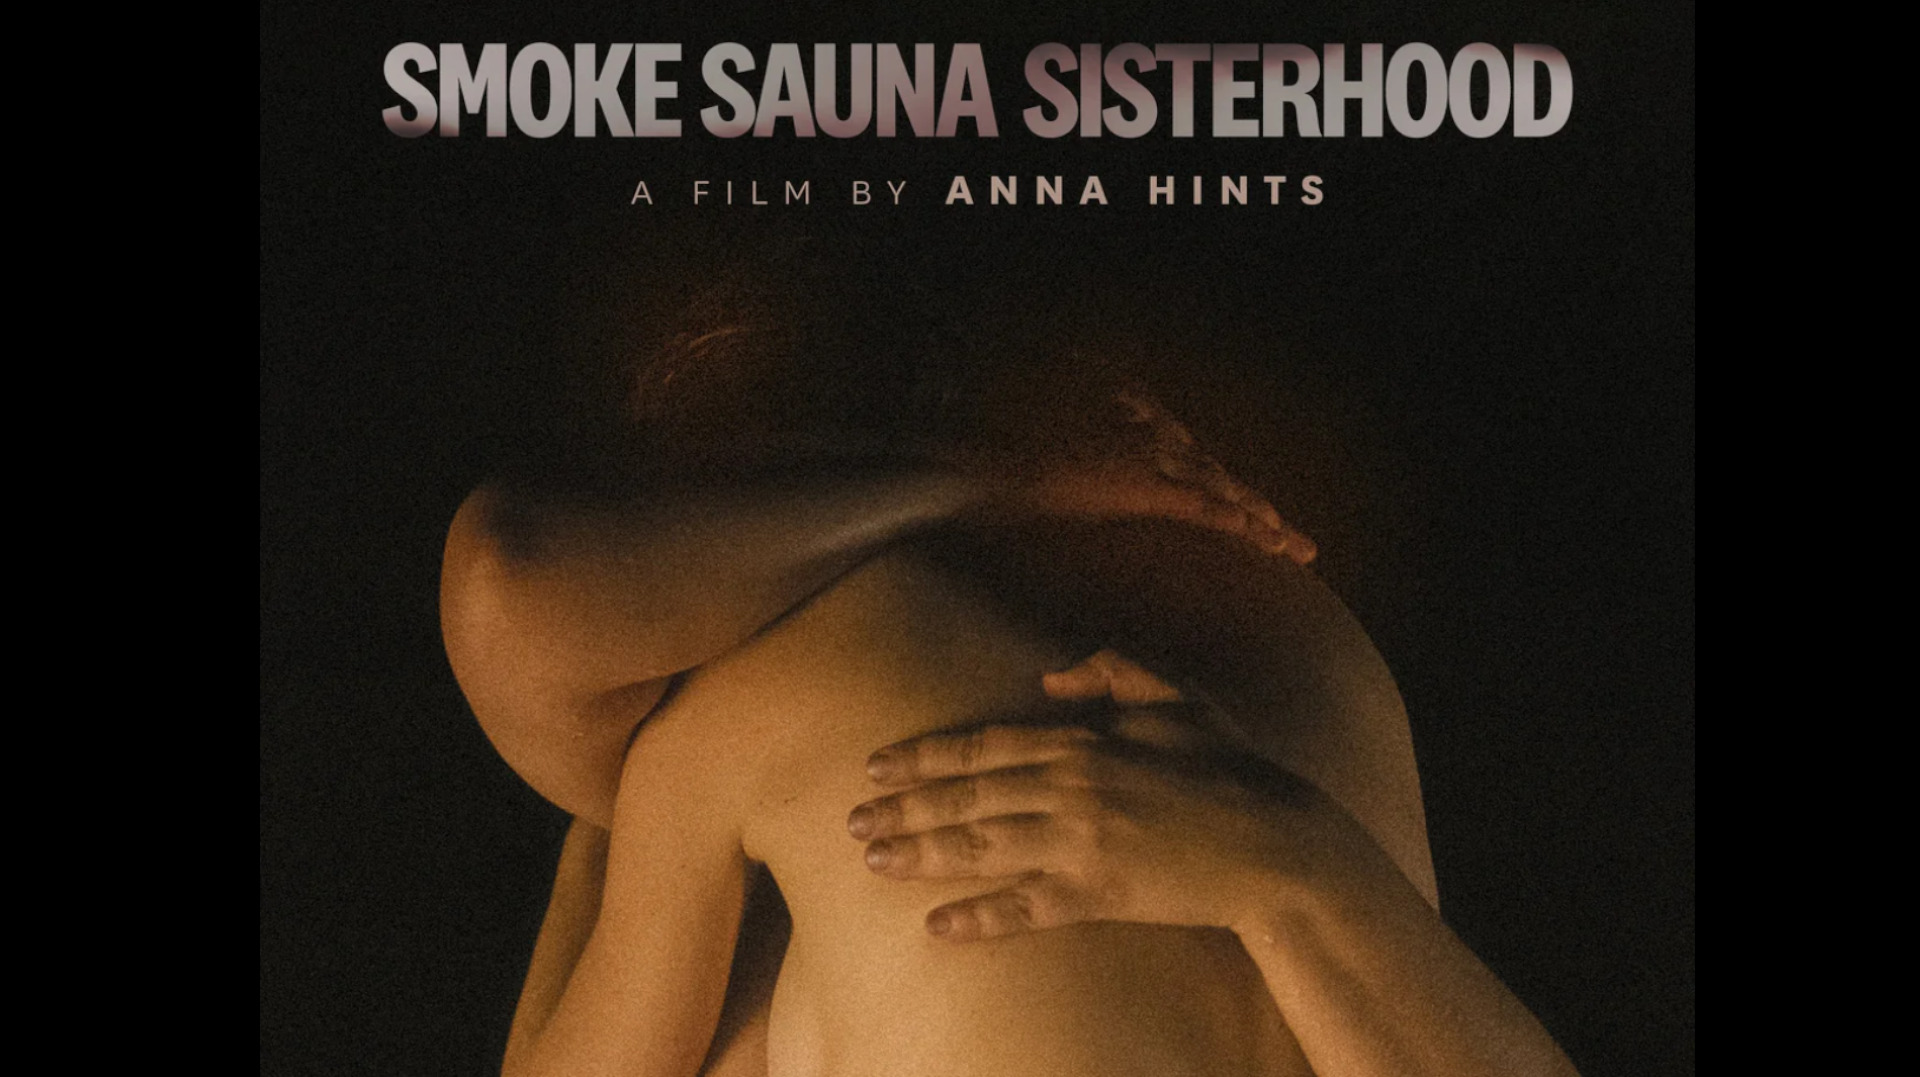 Projecció de “Smoke Sauna Sisterhood”